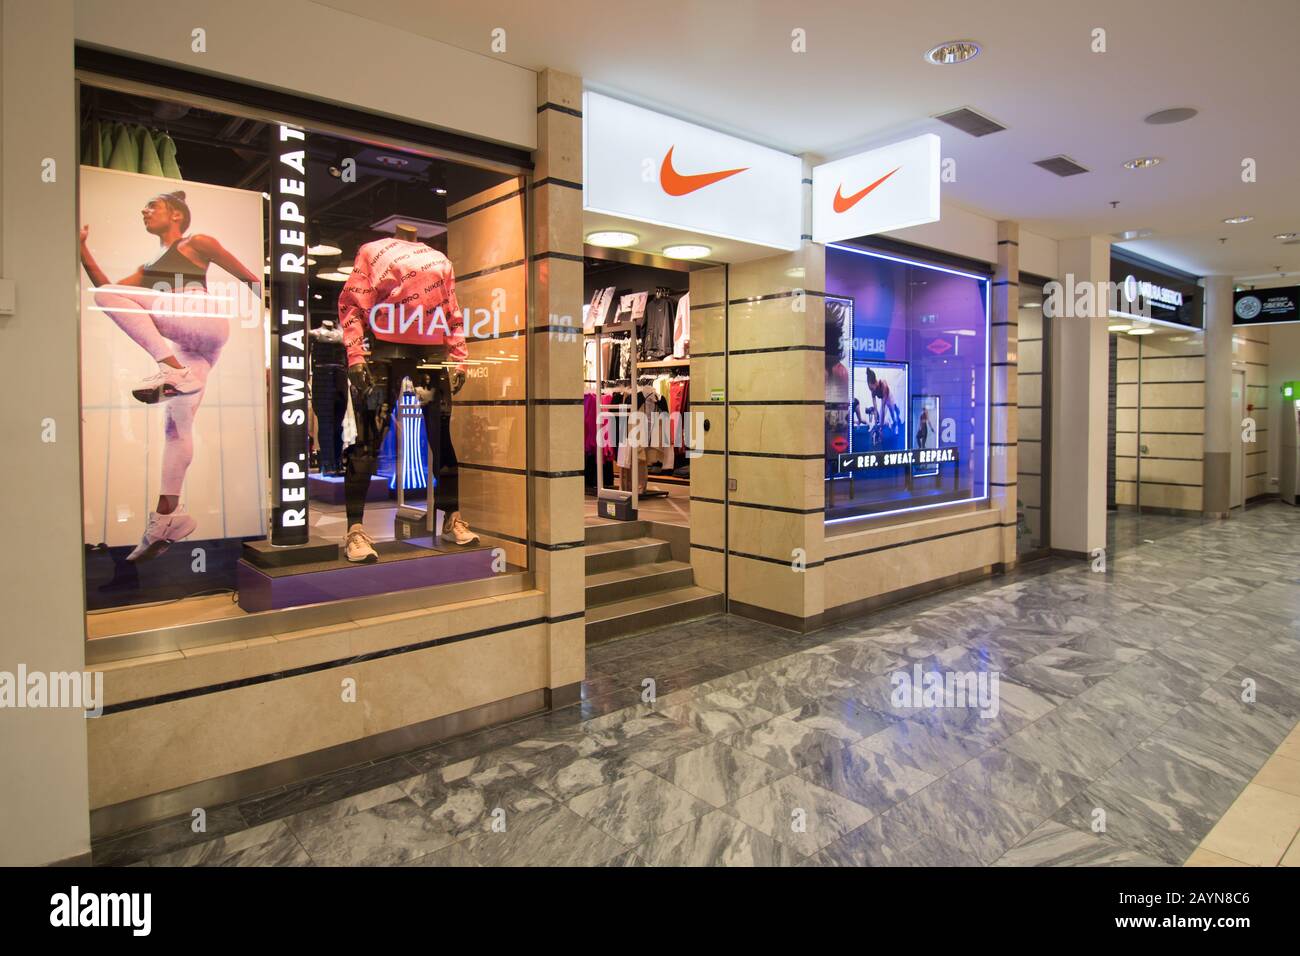 Nike shop facade in Tallinn, Estonia Stock Photo - Alamy